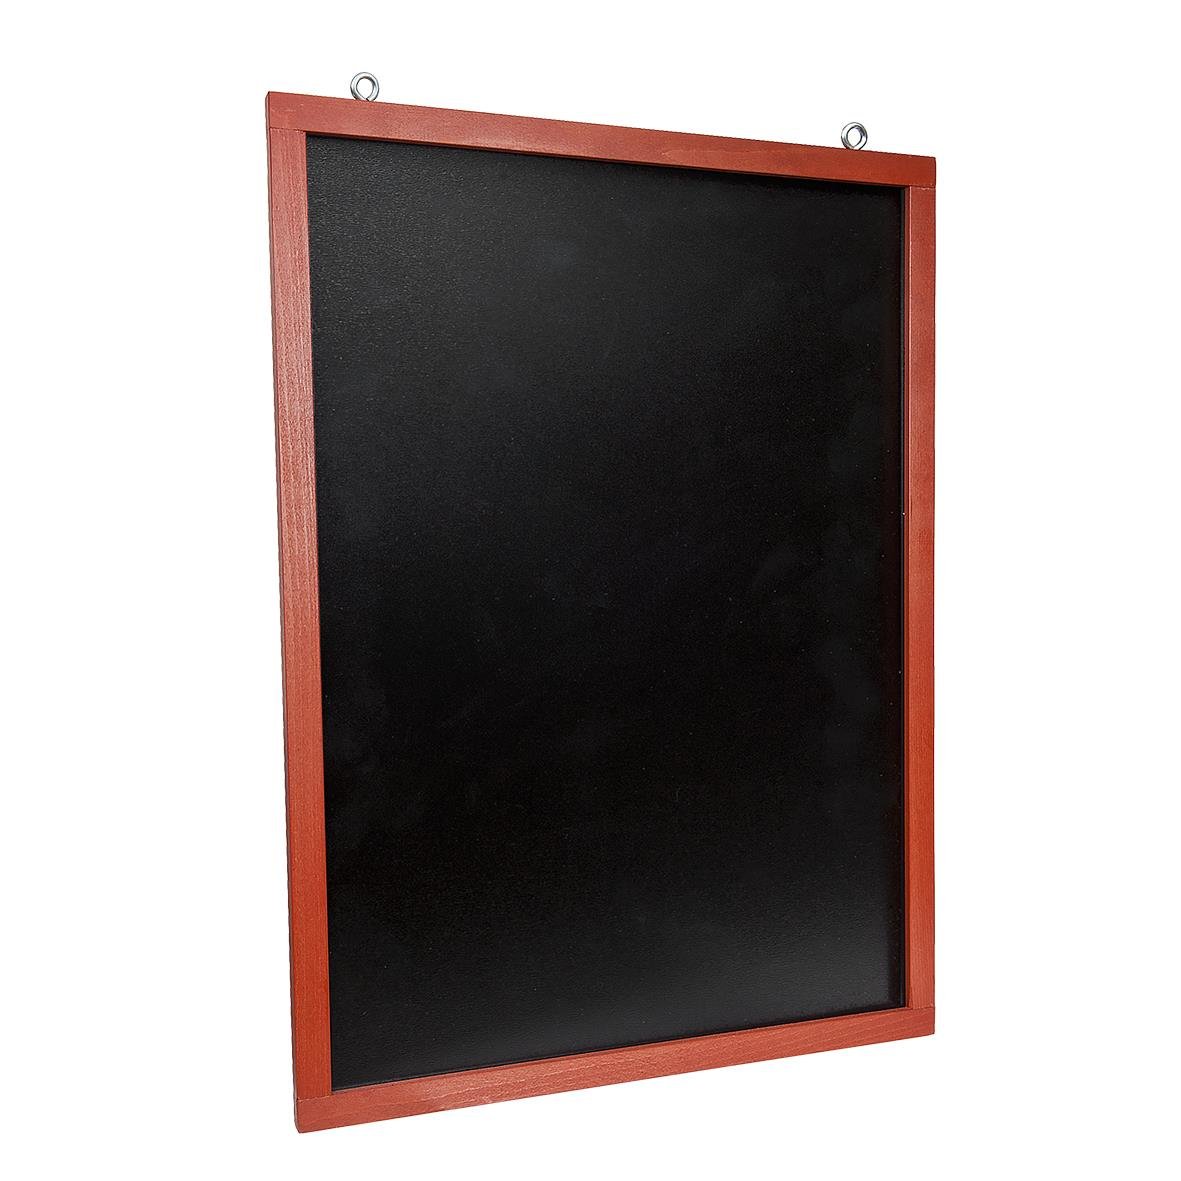 Griffeltavla Blackboard 50x70cm